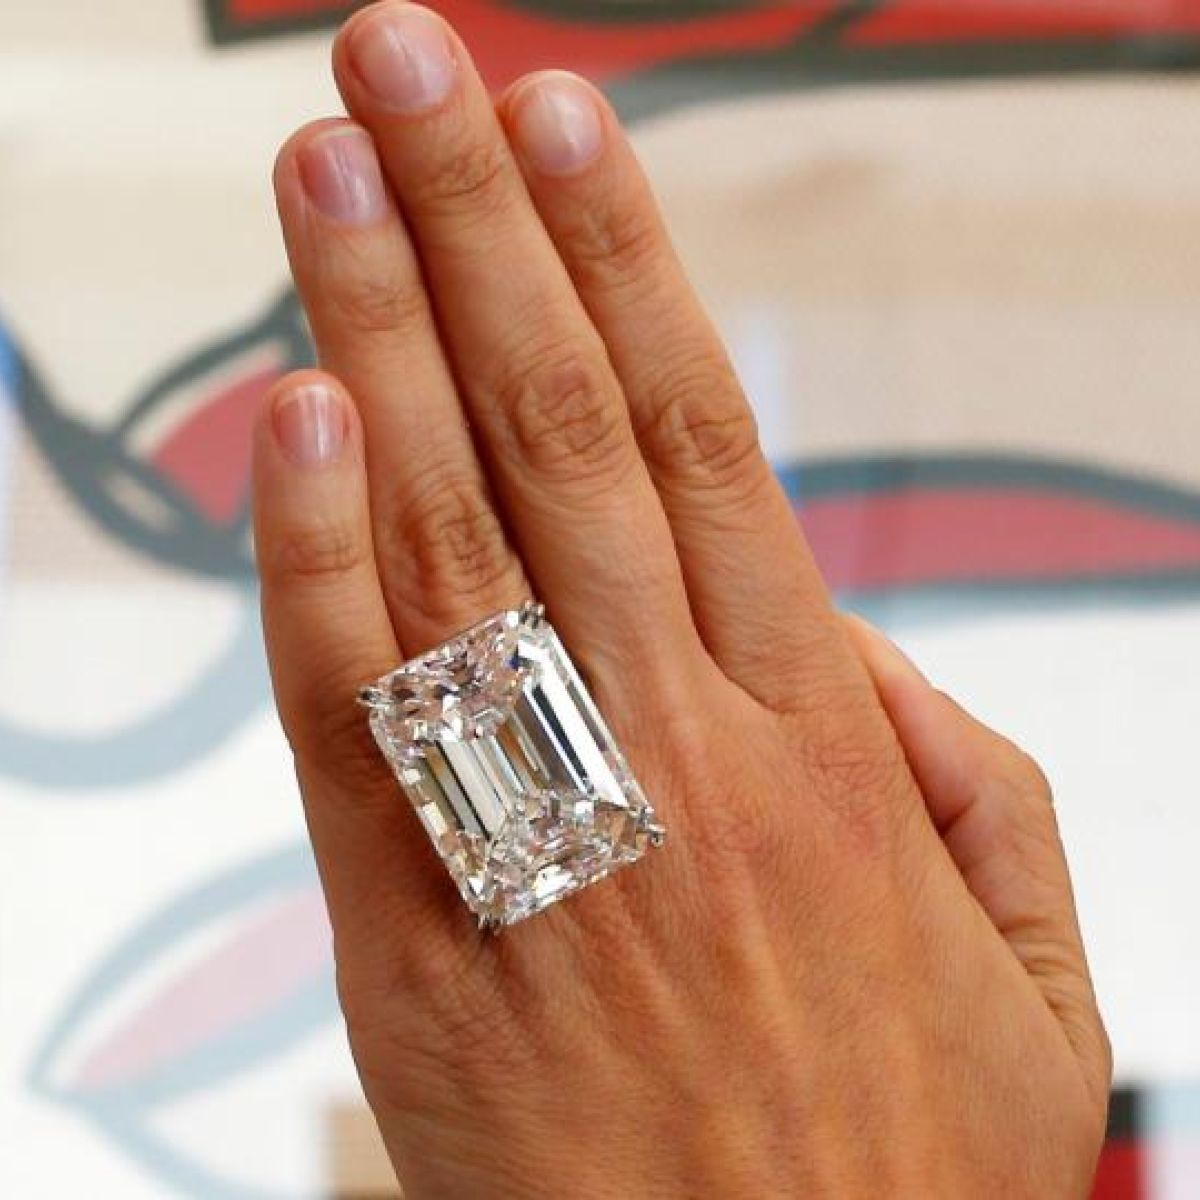 Flawless 100-carat diamond sells for 